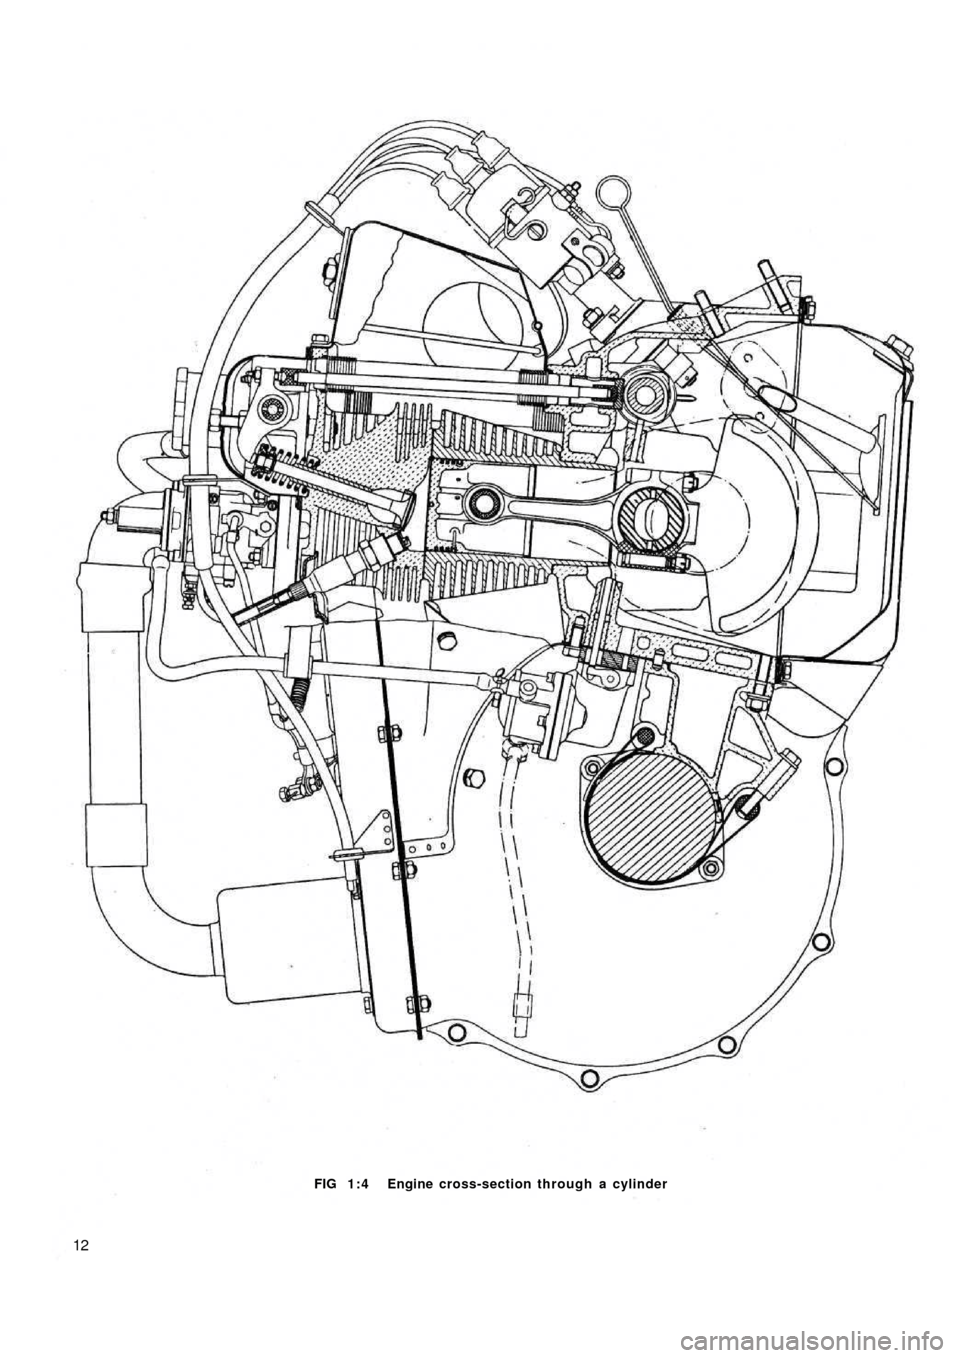 FIAT 500 1958 1.G Workshop Manual FIG 1 : 4  Engine cross-section through a cylinder
12 